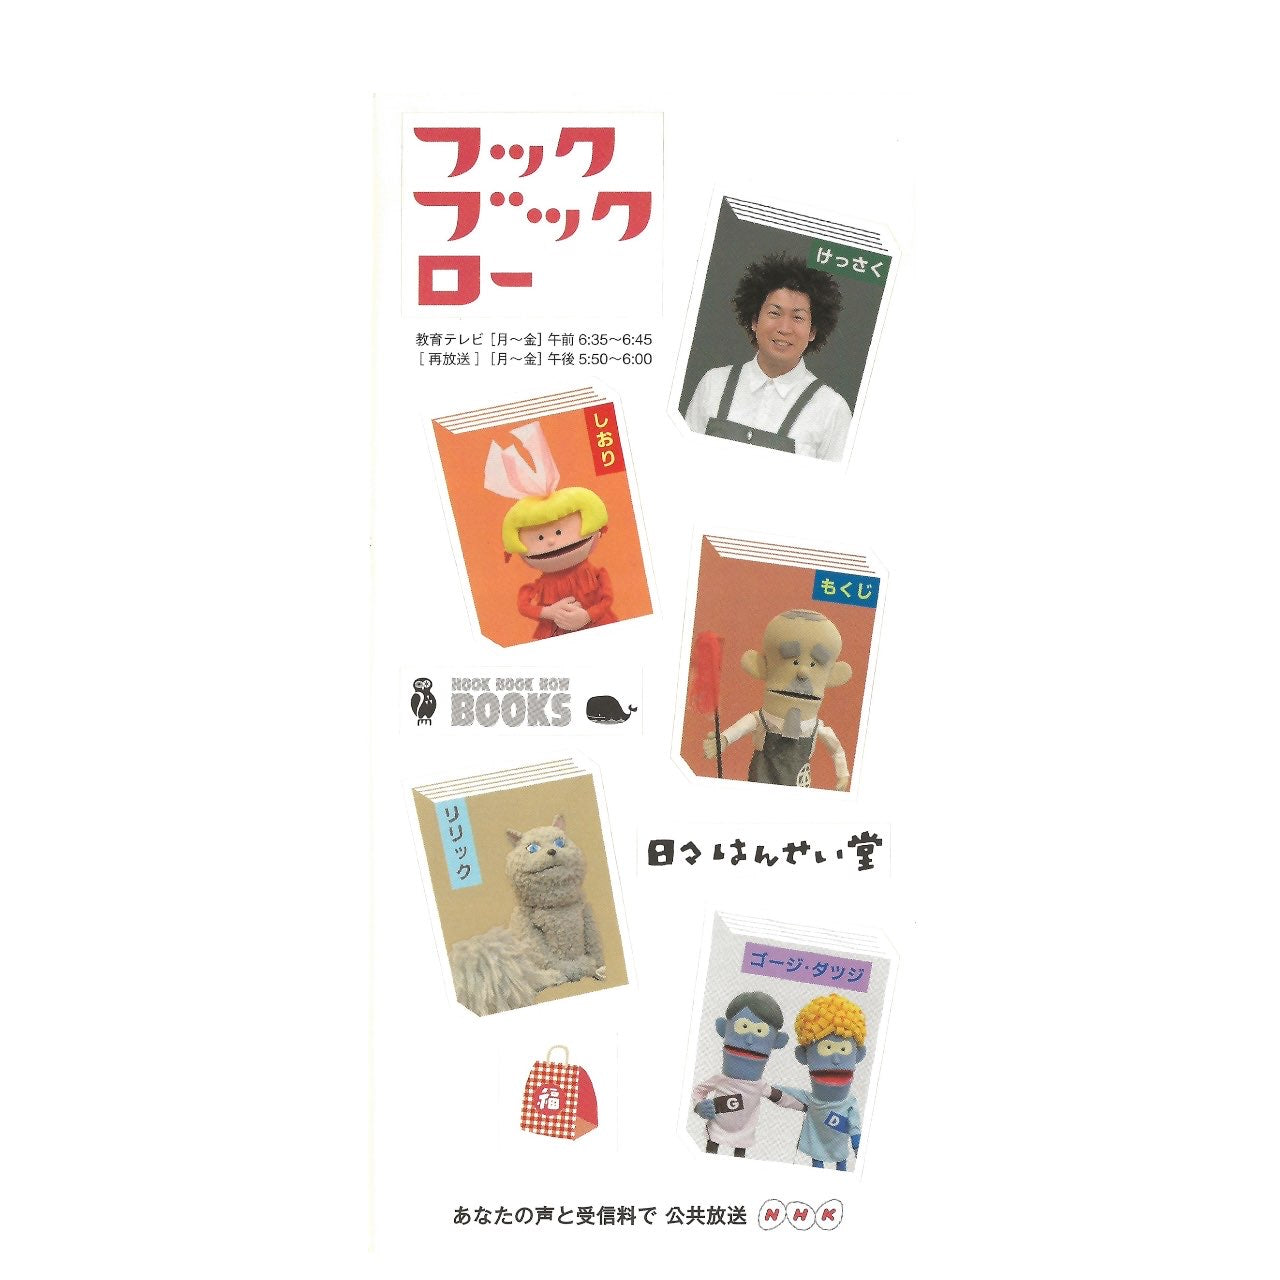 Y2K Retro Japan Books Sticker Sheet